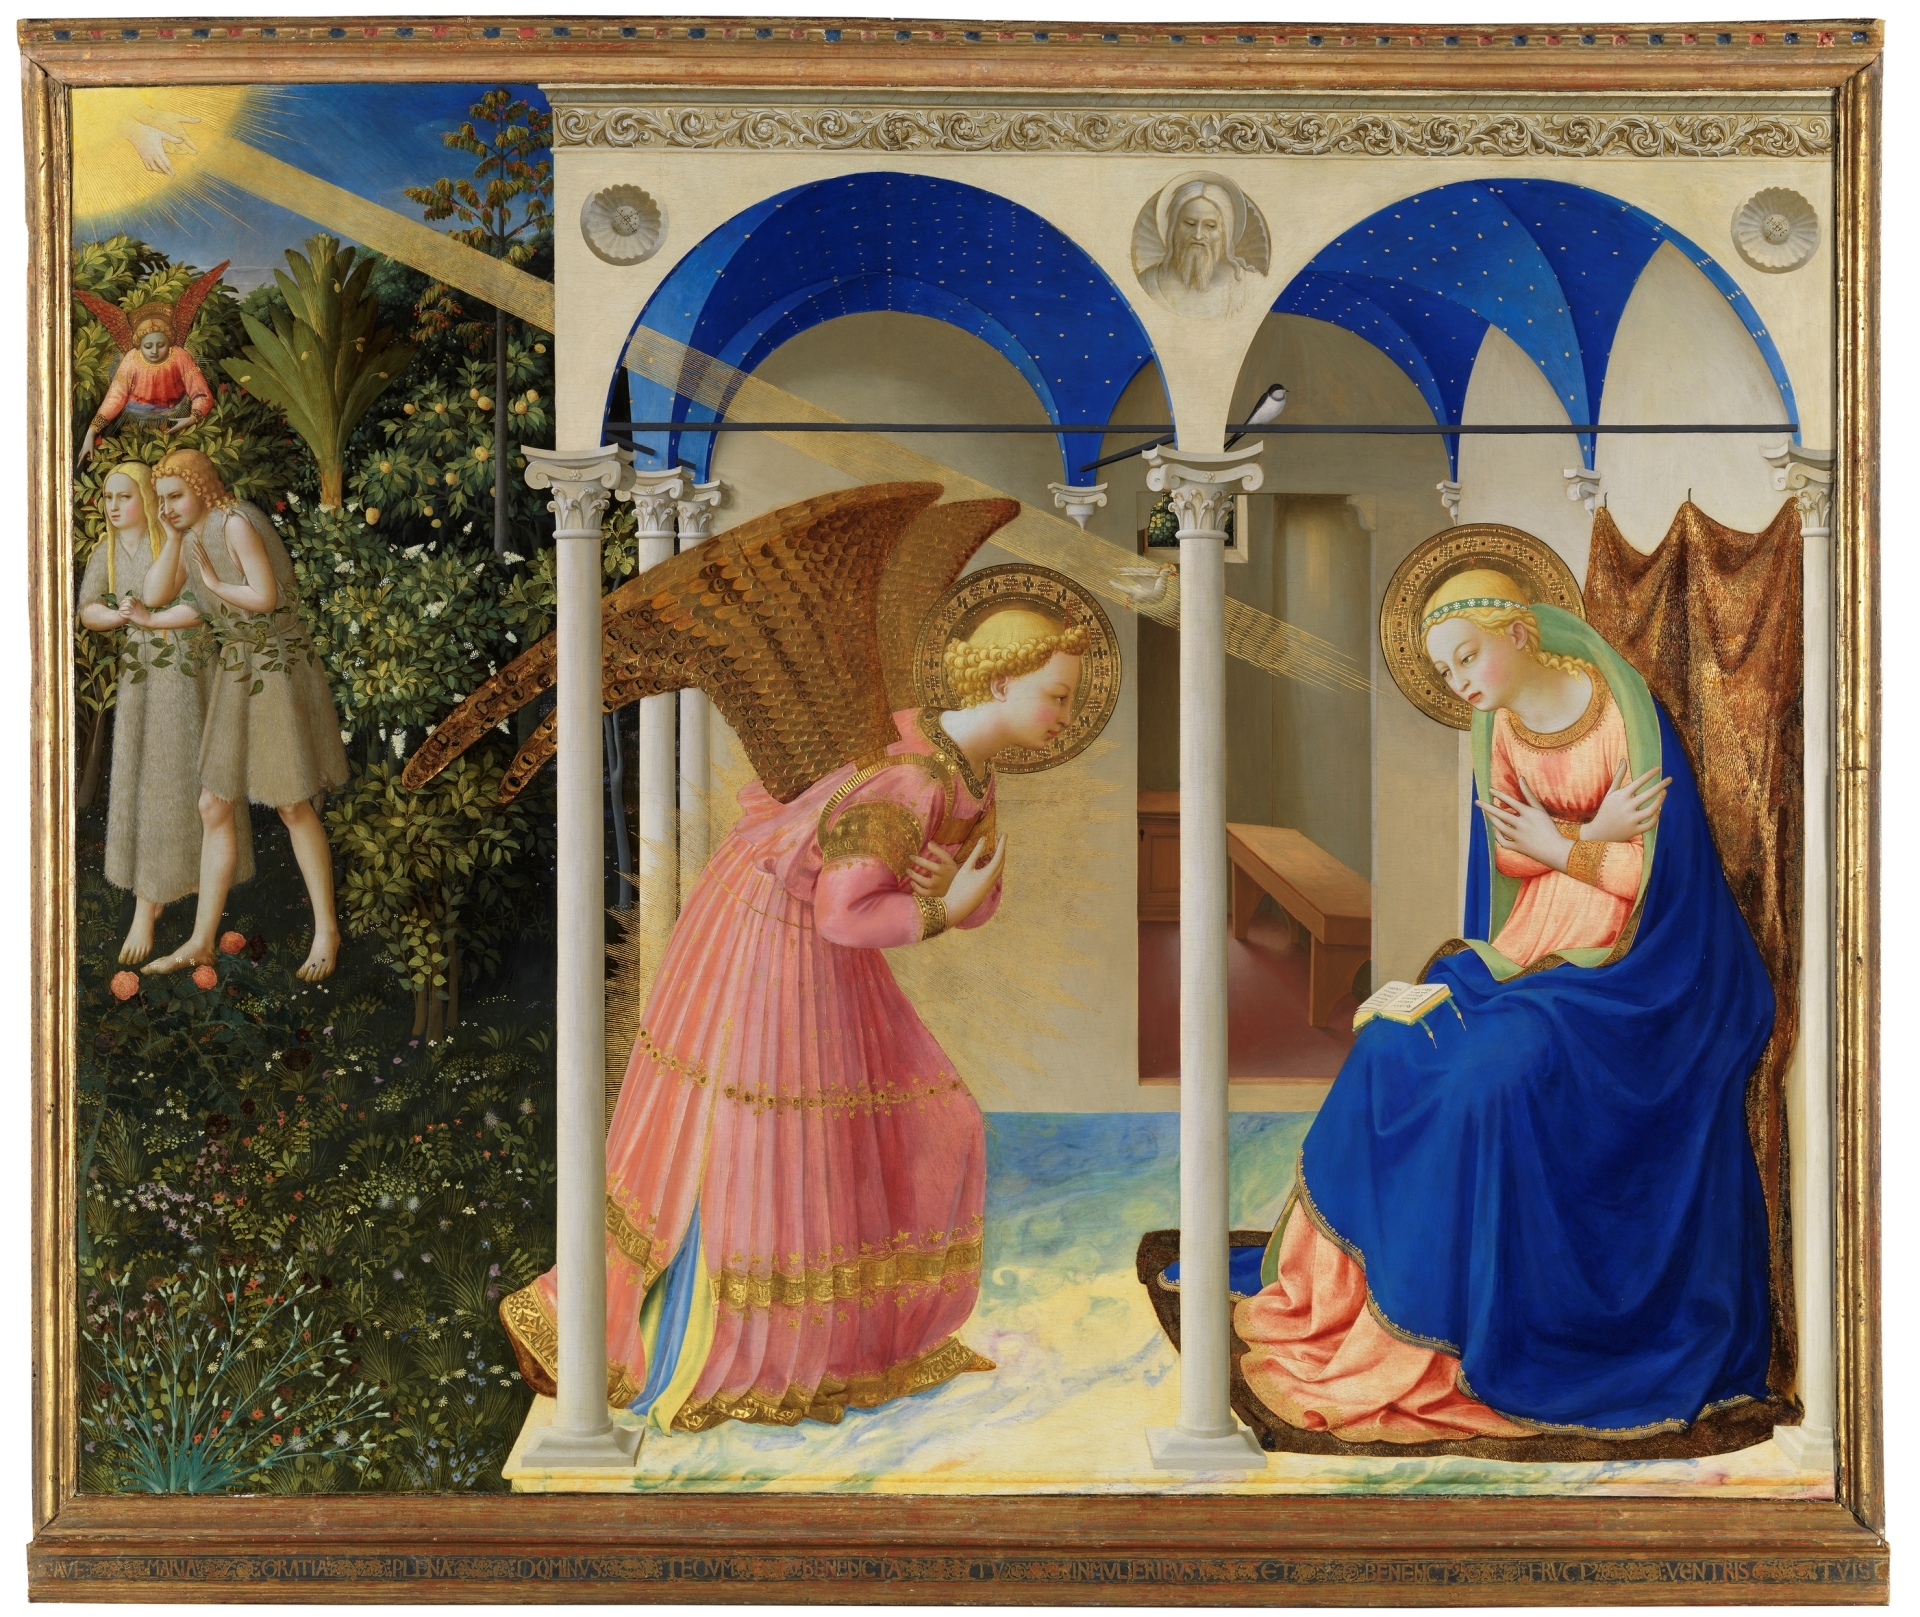 L' Annonciation by Fra Angelico - Vers 1426 - 162,3 x 191,5 cm Museo del Prado